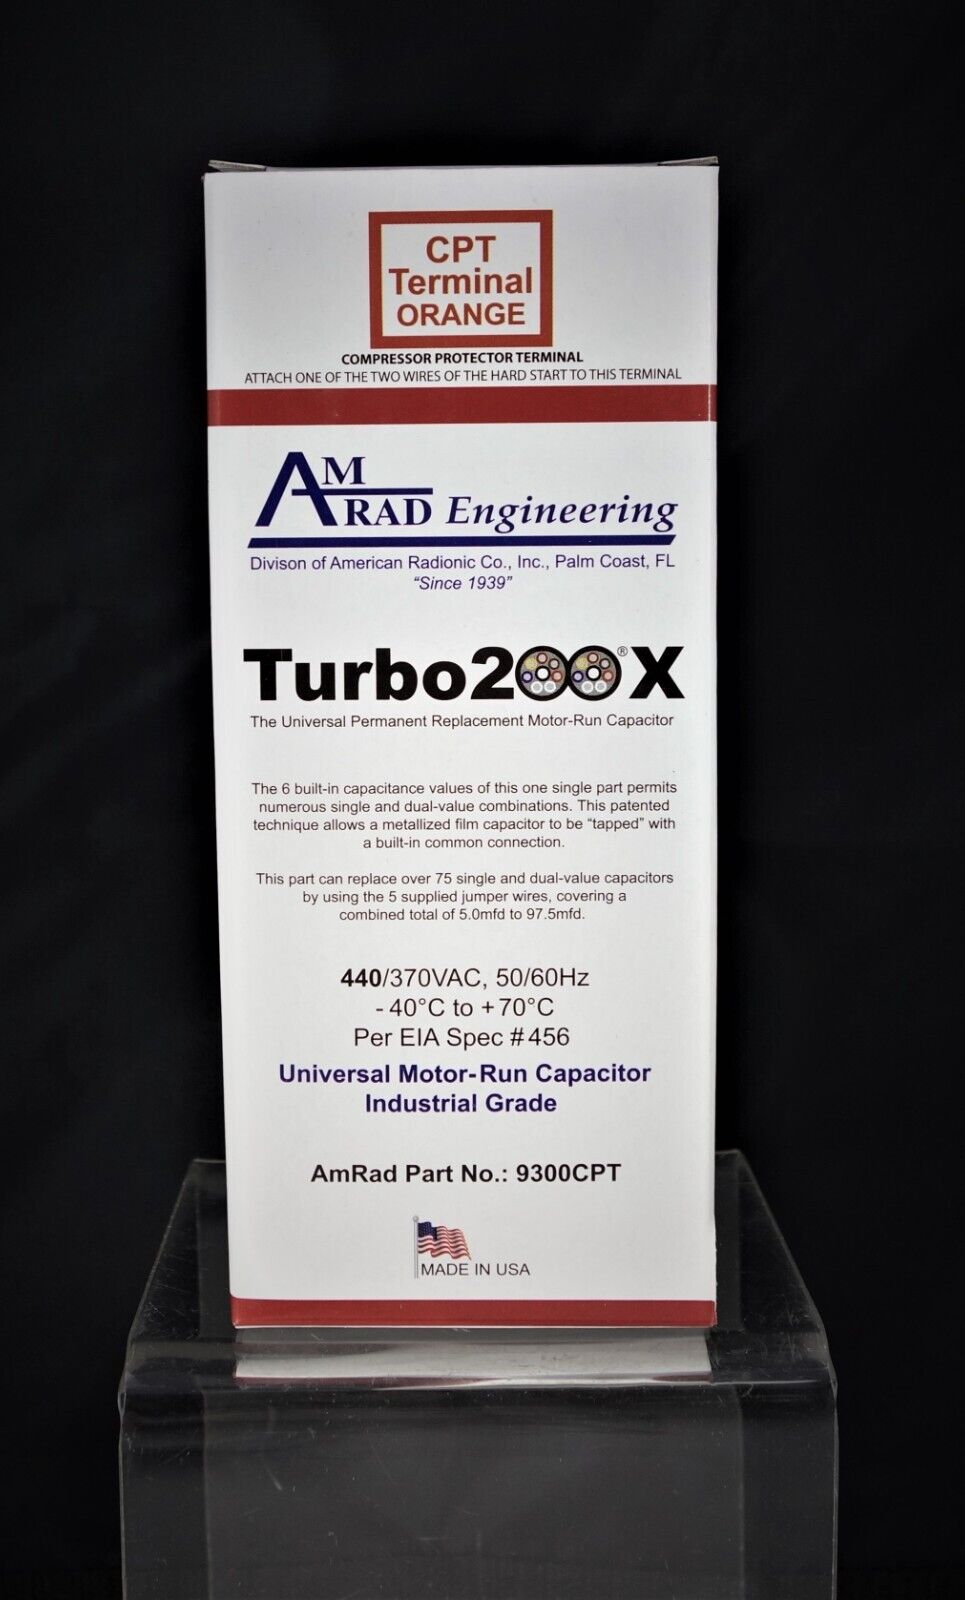 Turbo200X UNIVERSAL MOTOR- RUN CAPACITOR FROM AMRAD ENGINEERING